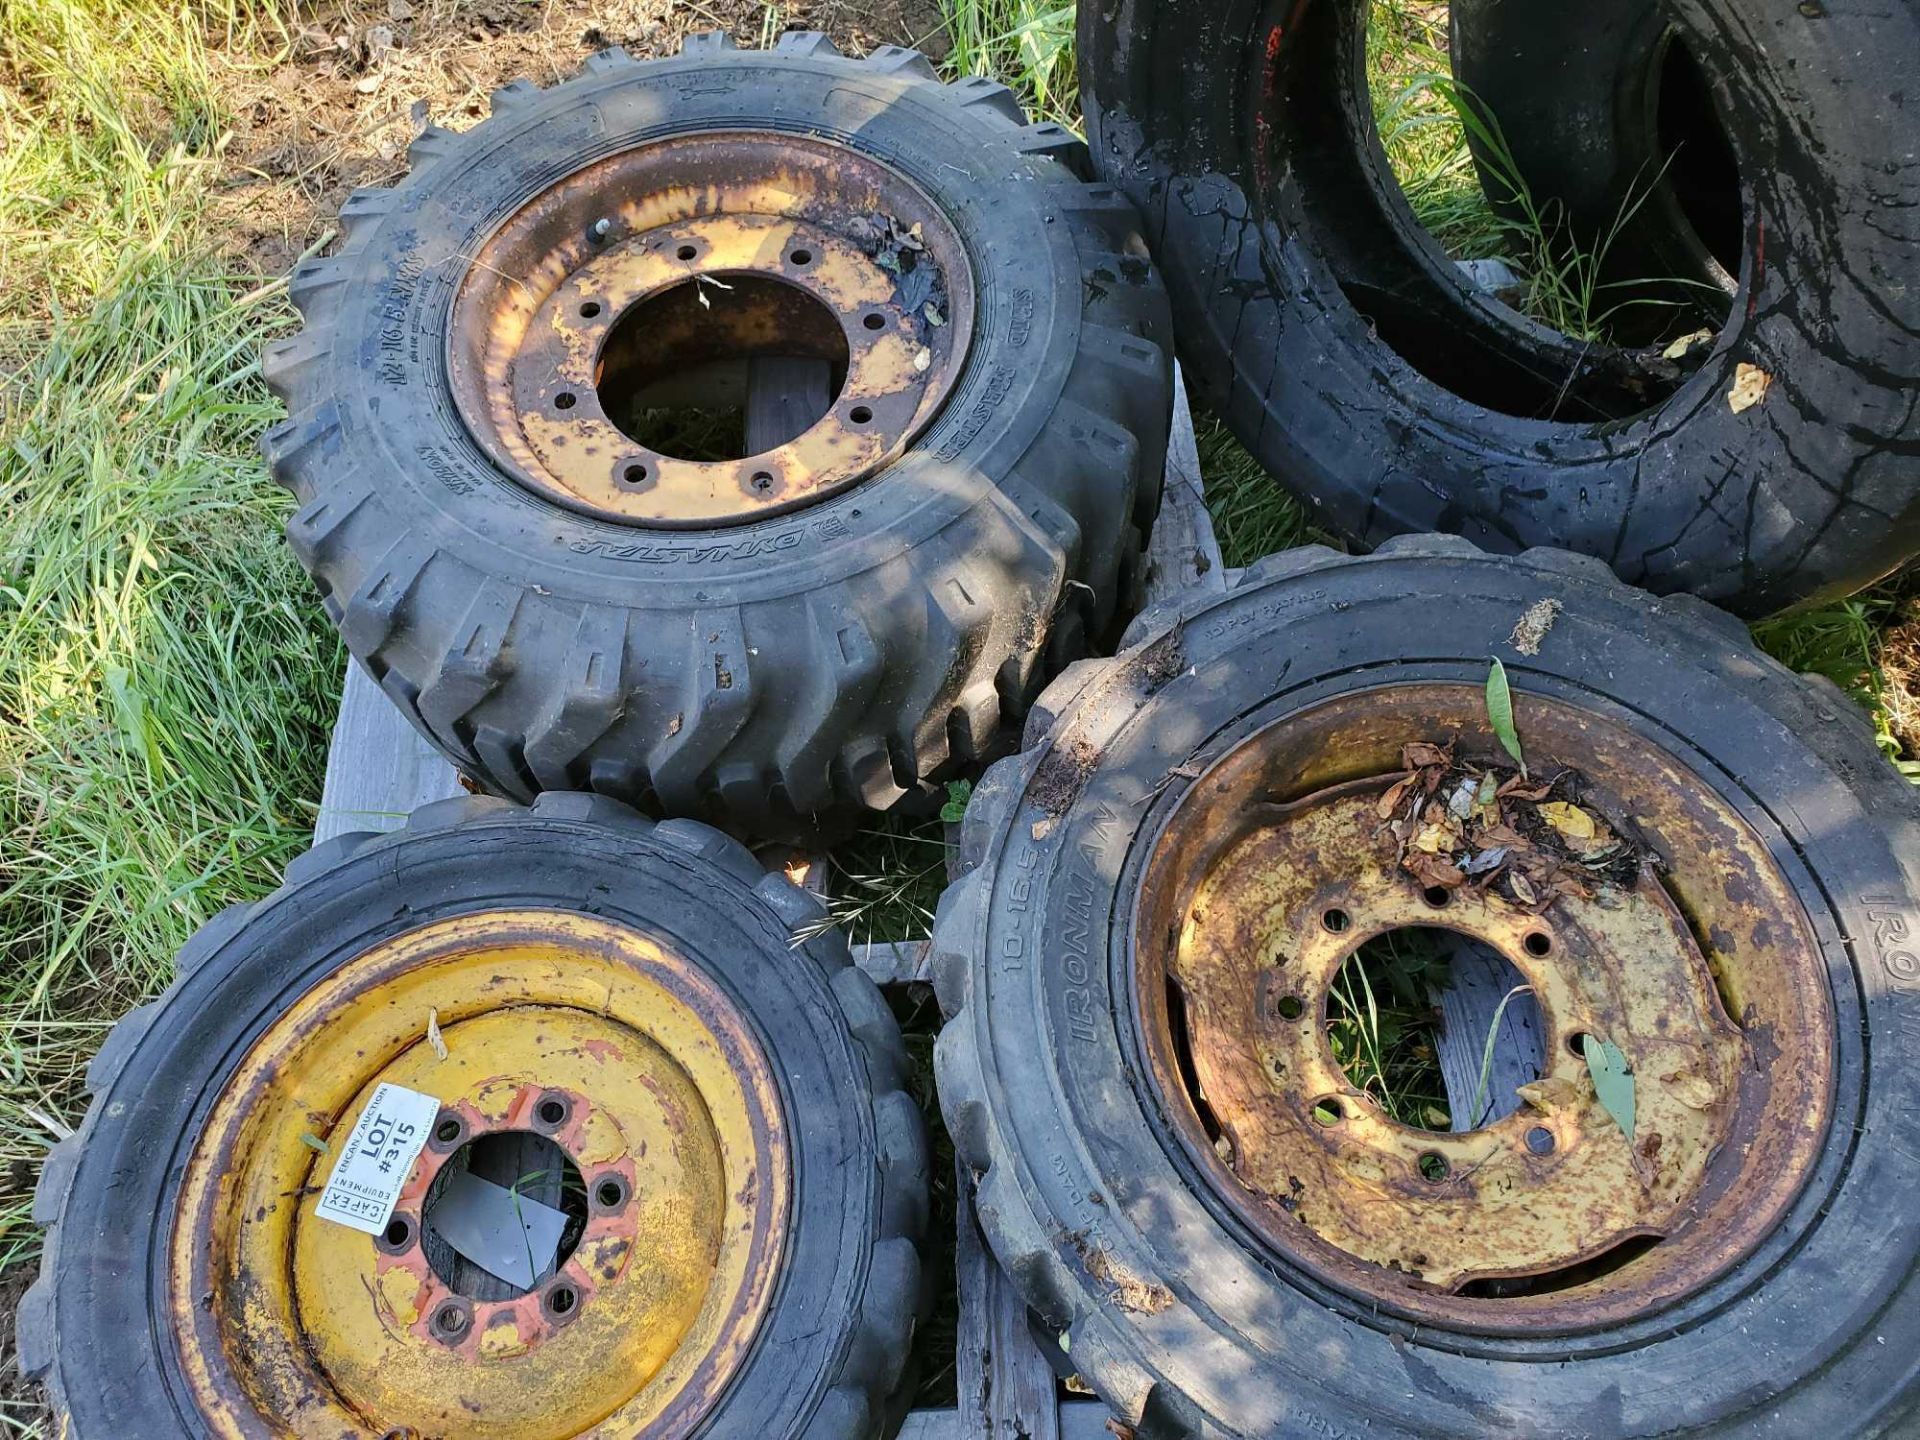 mixed tires / pneus melanges - Image 2 of 3